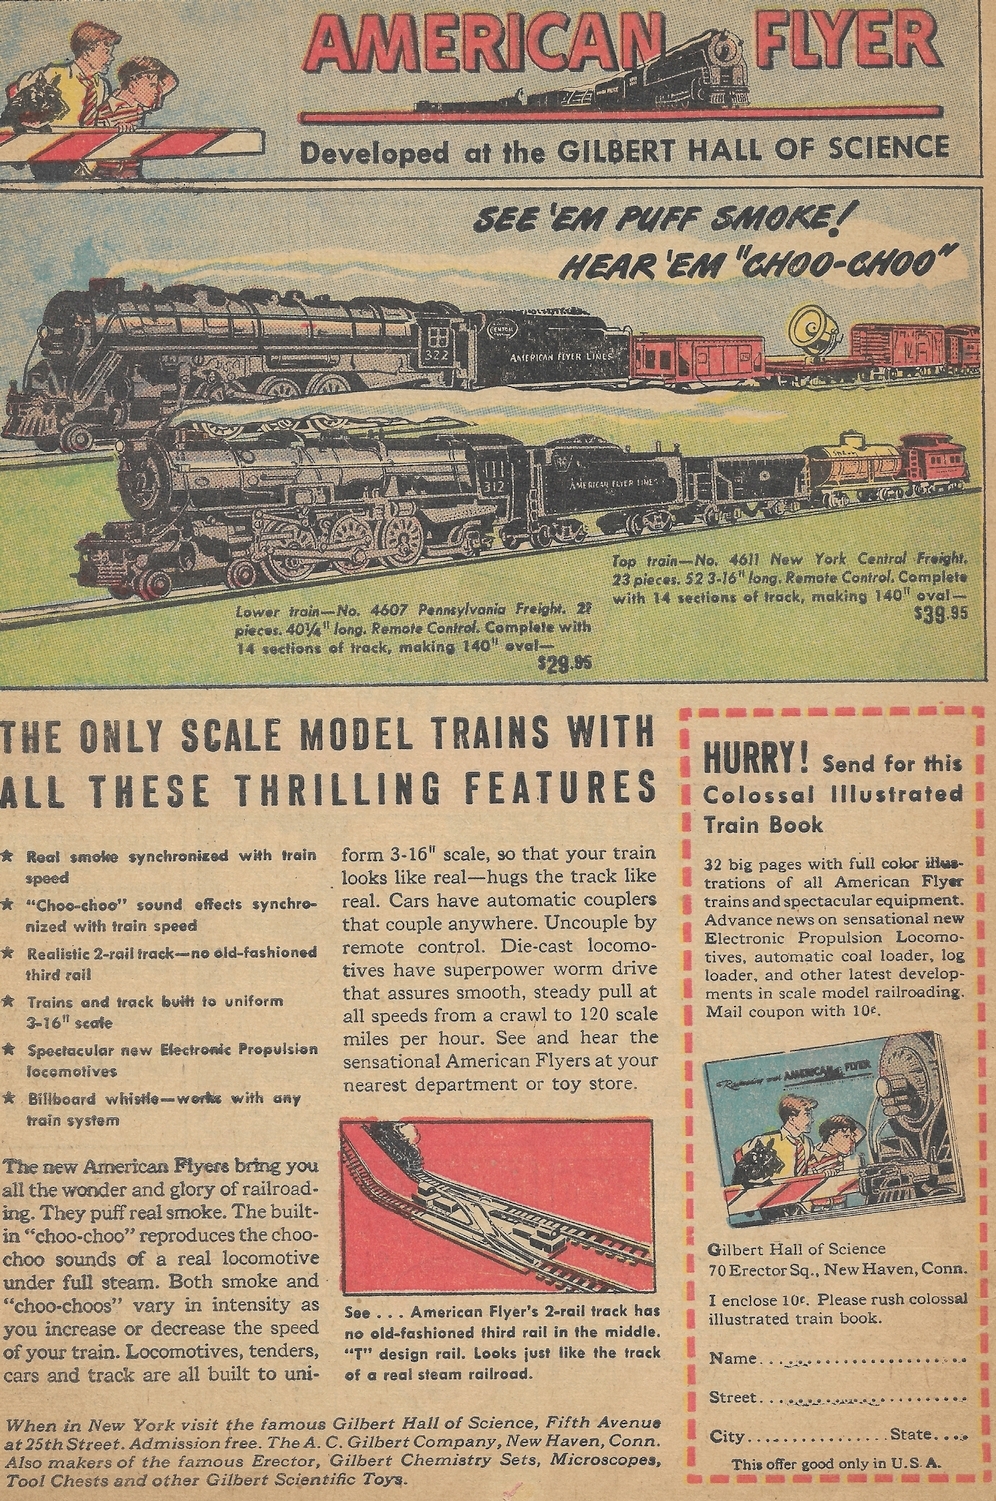 1947 Newspaper Ad